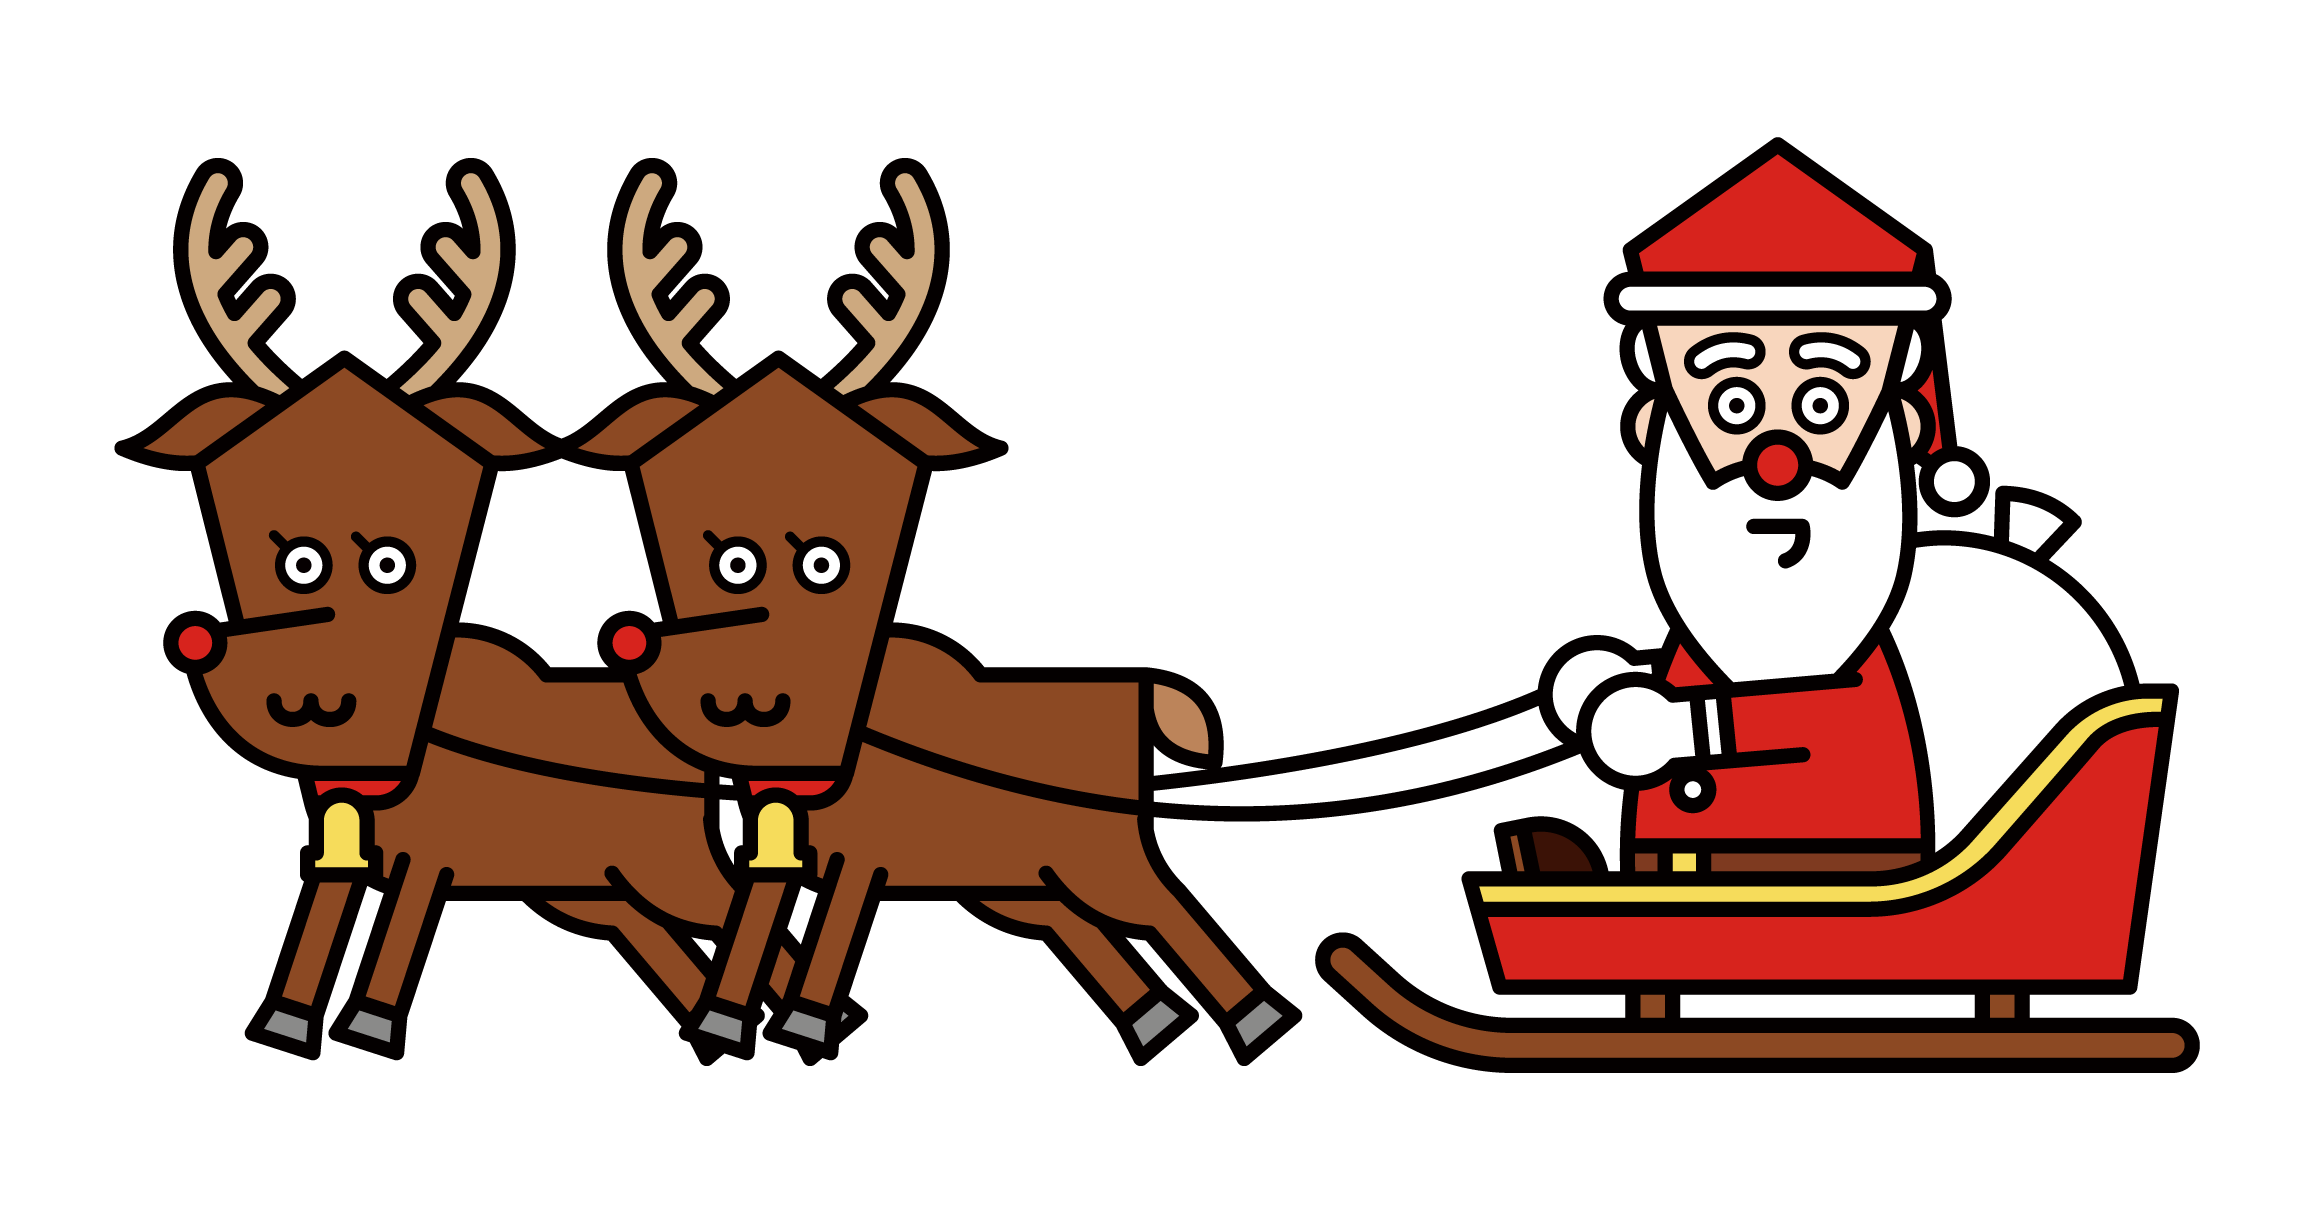 Illustration of Santa Claus on a Sleigh